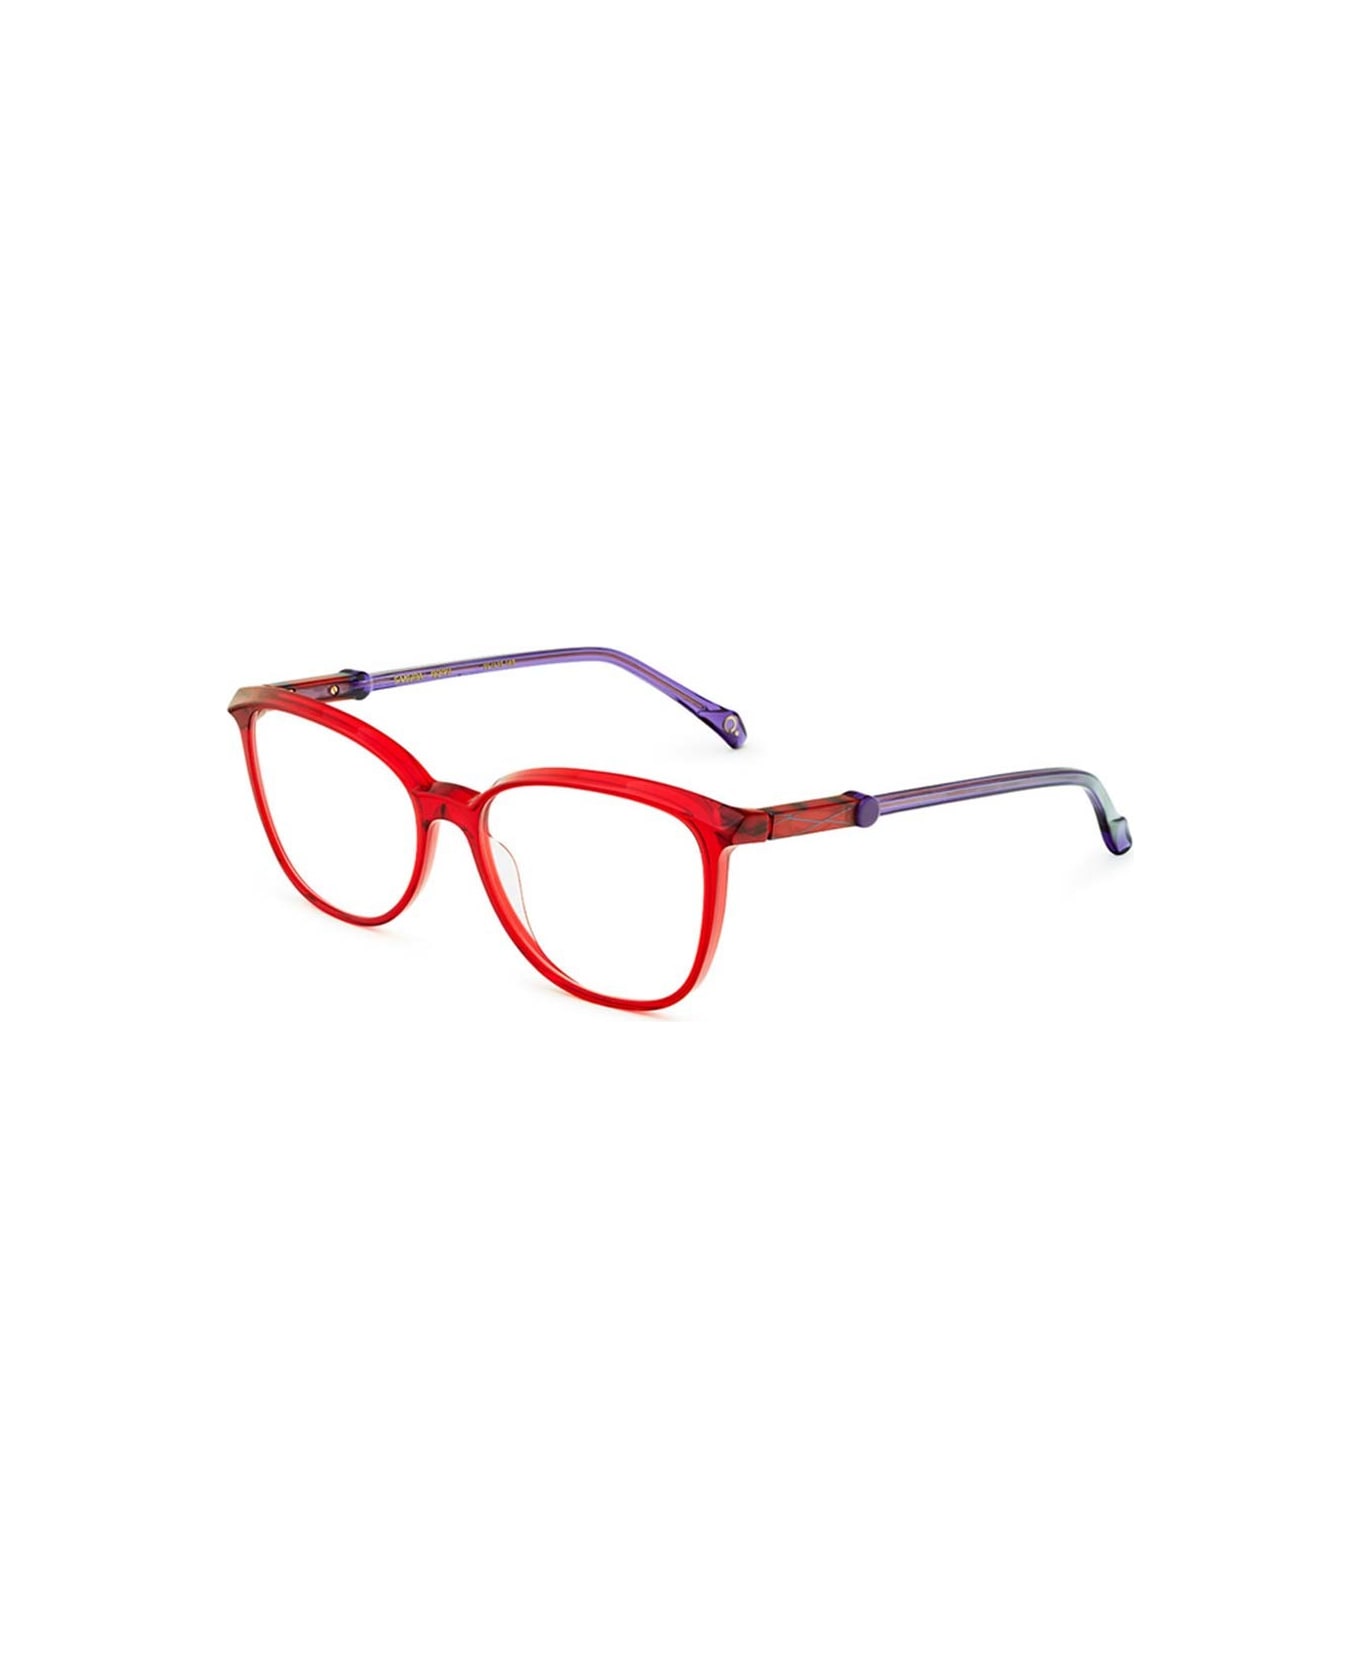 Etnia Barcelona Glasses - Rosso